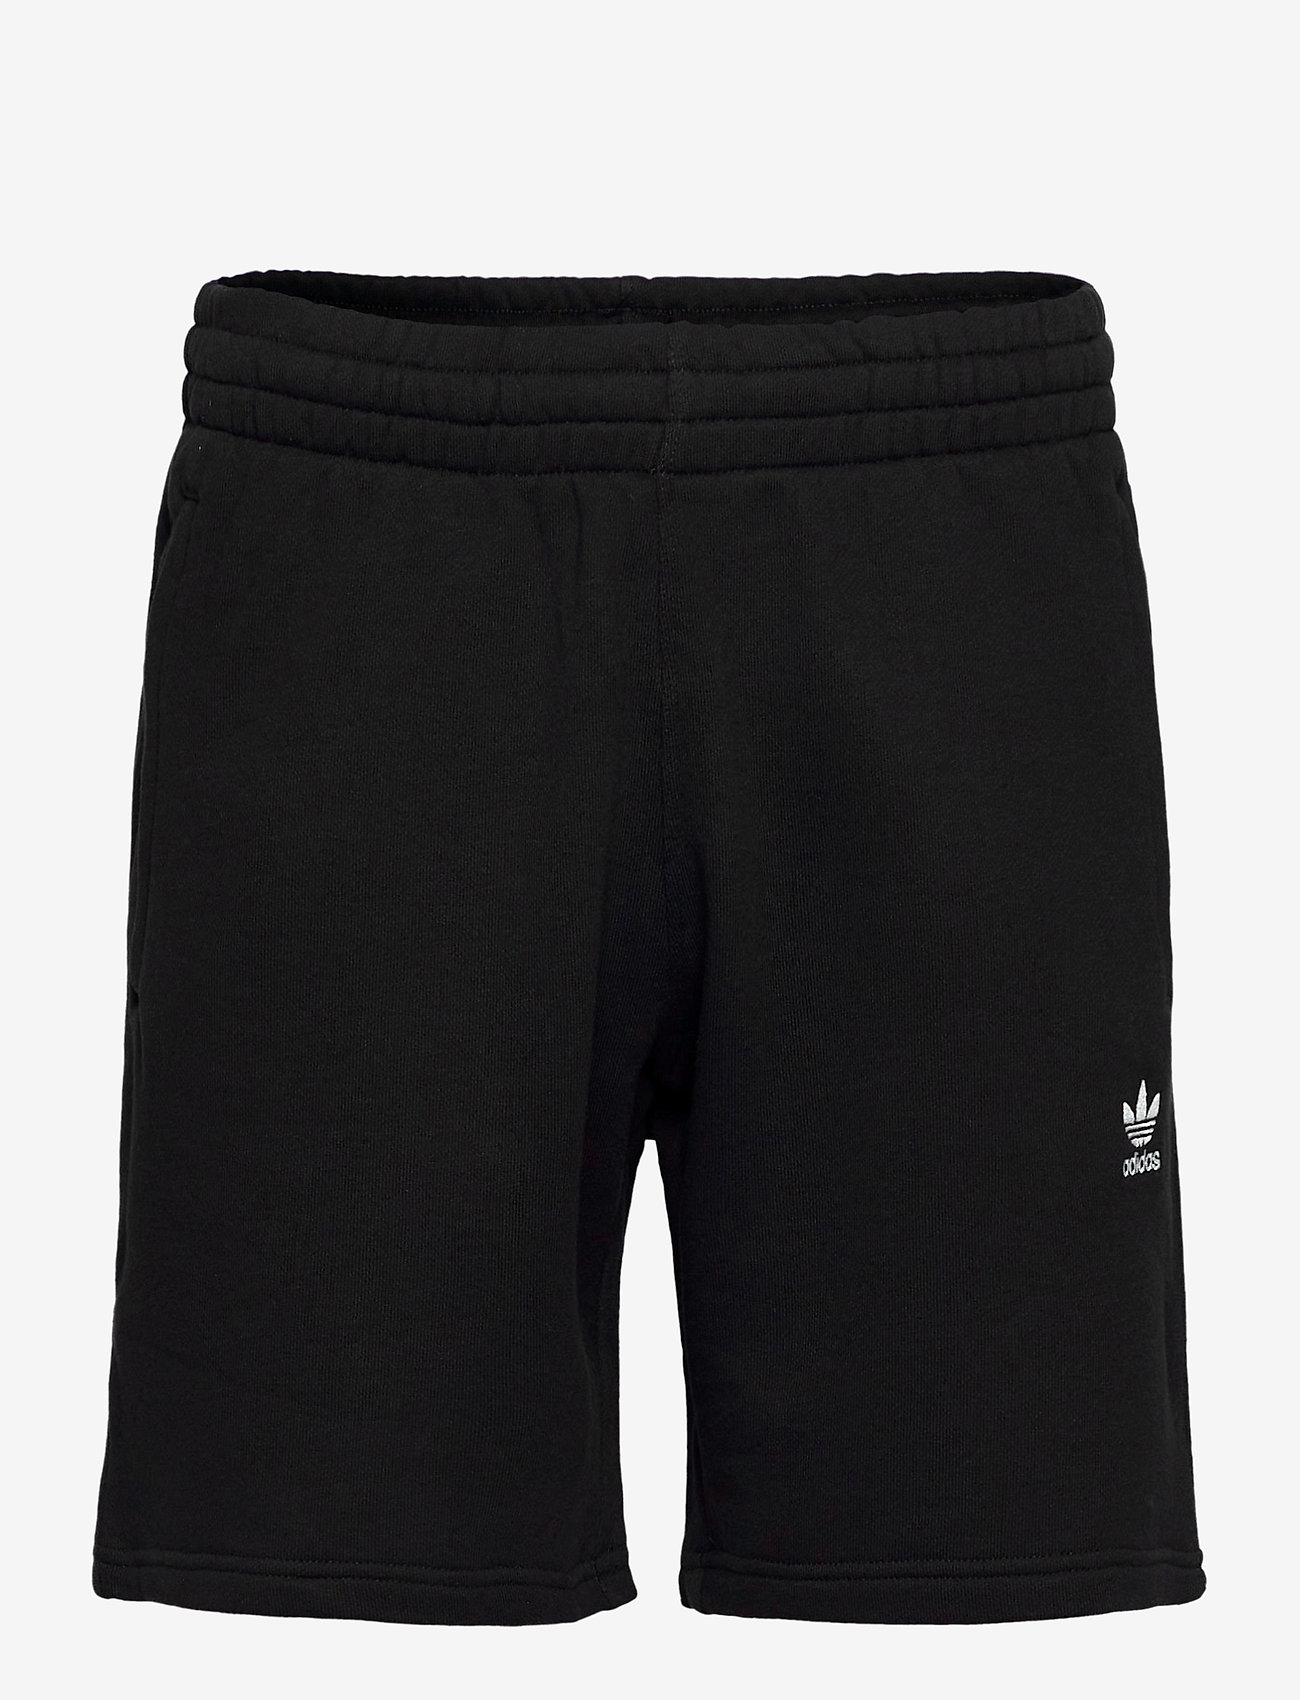 Trefoil Essentials Shorts (Black) (35 